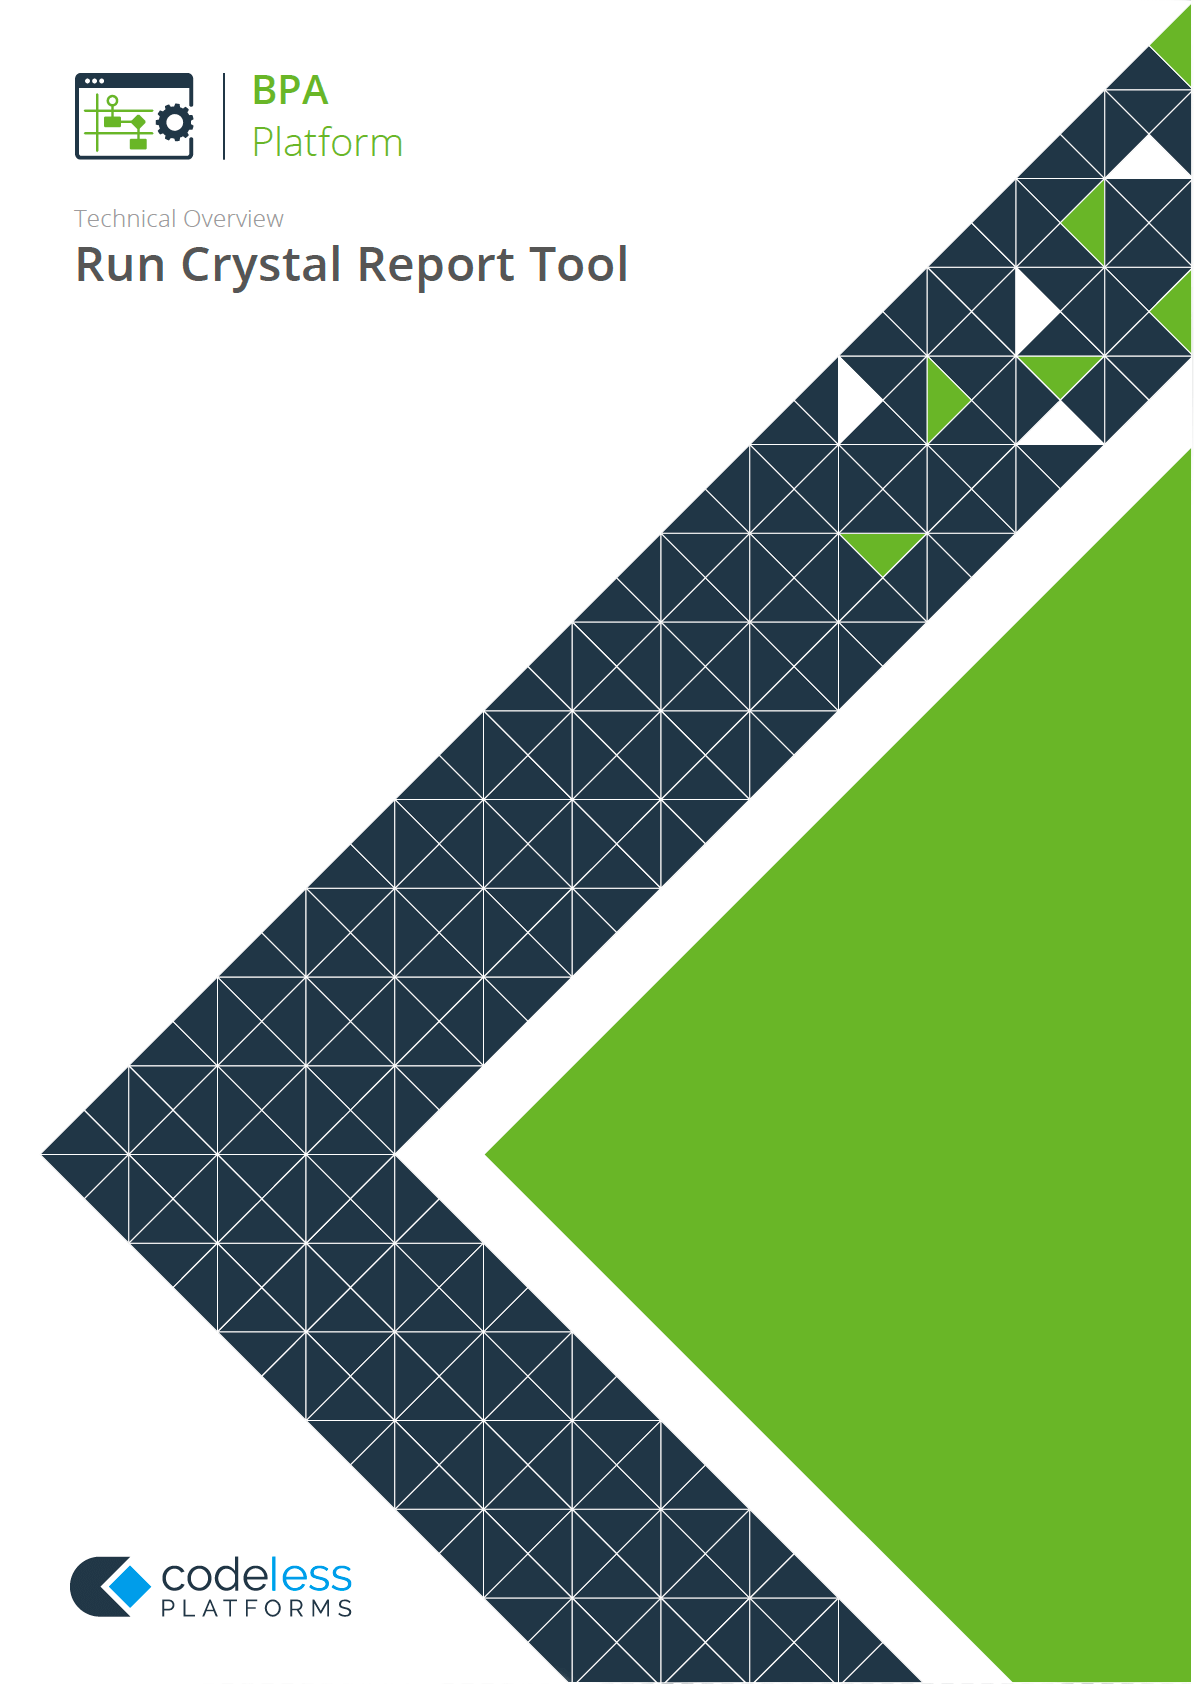 Run Crystal Report Tool